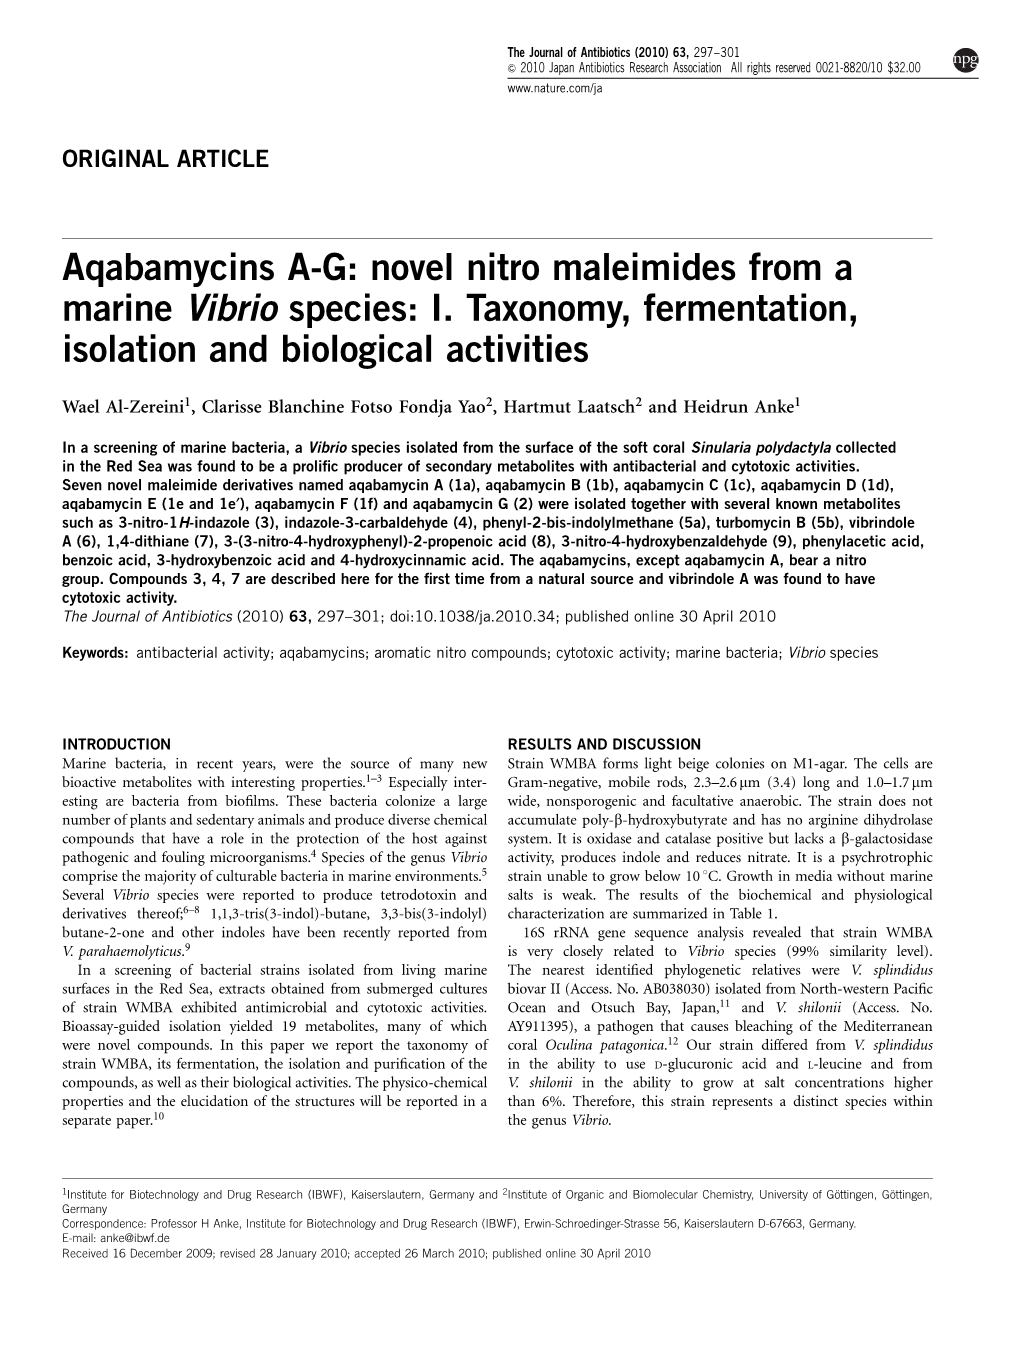 Aqabamycins AG: Novel Nitro Maleimides from a Marine Vibrio Species